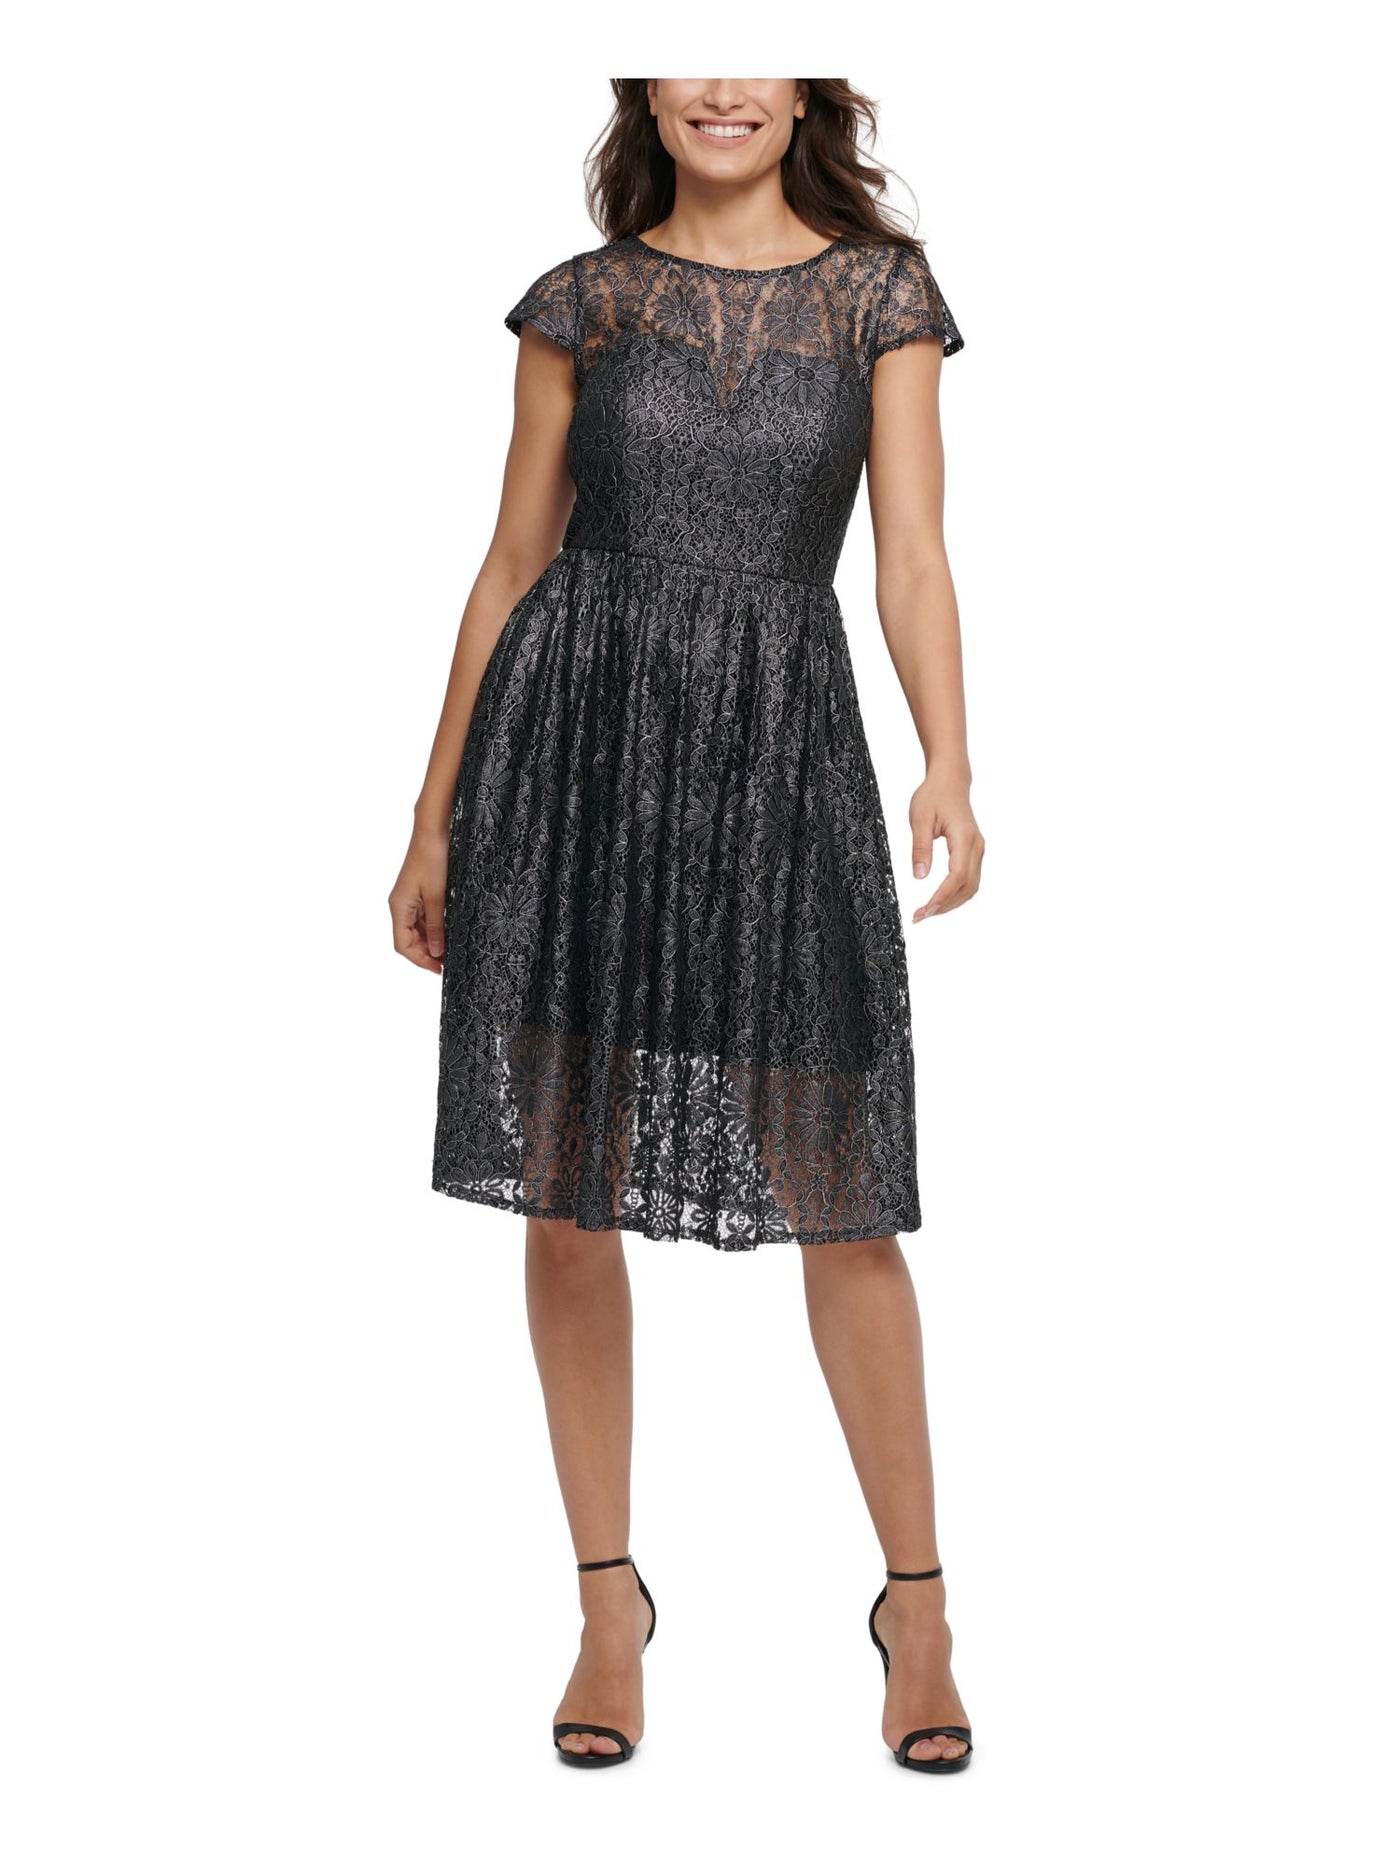 KENSIE DRESSES Womens Black Lace Floral Illusion Neckline Knee Length Cocktail Fit + Flare Dress 4